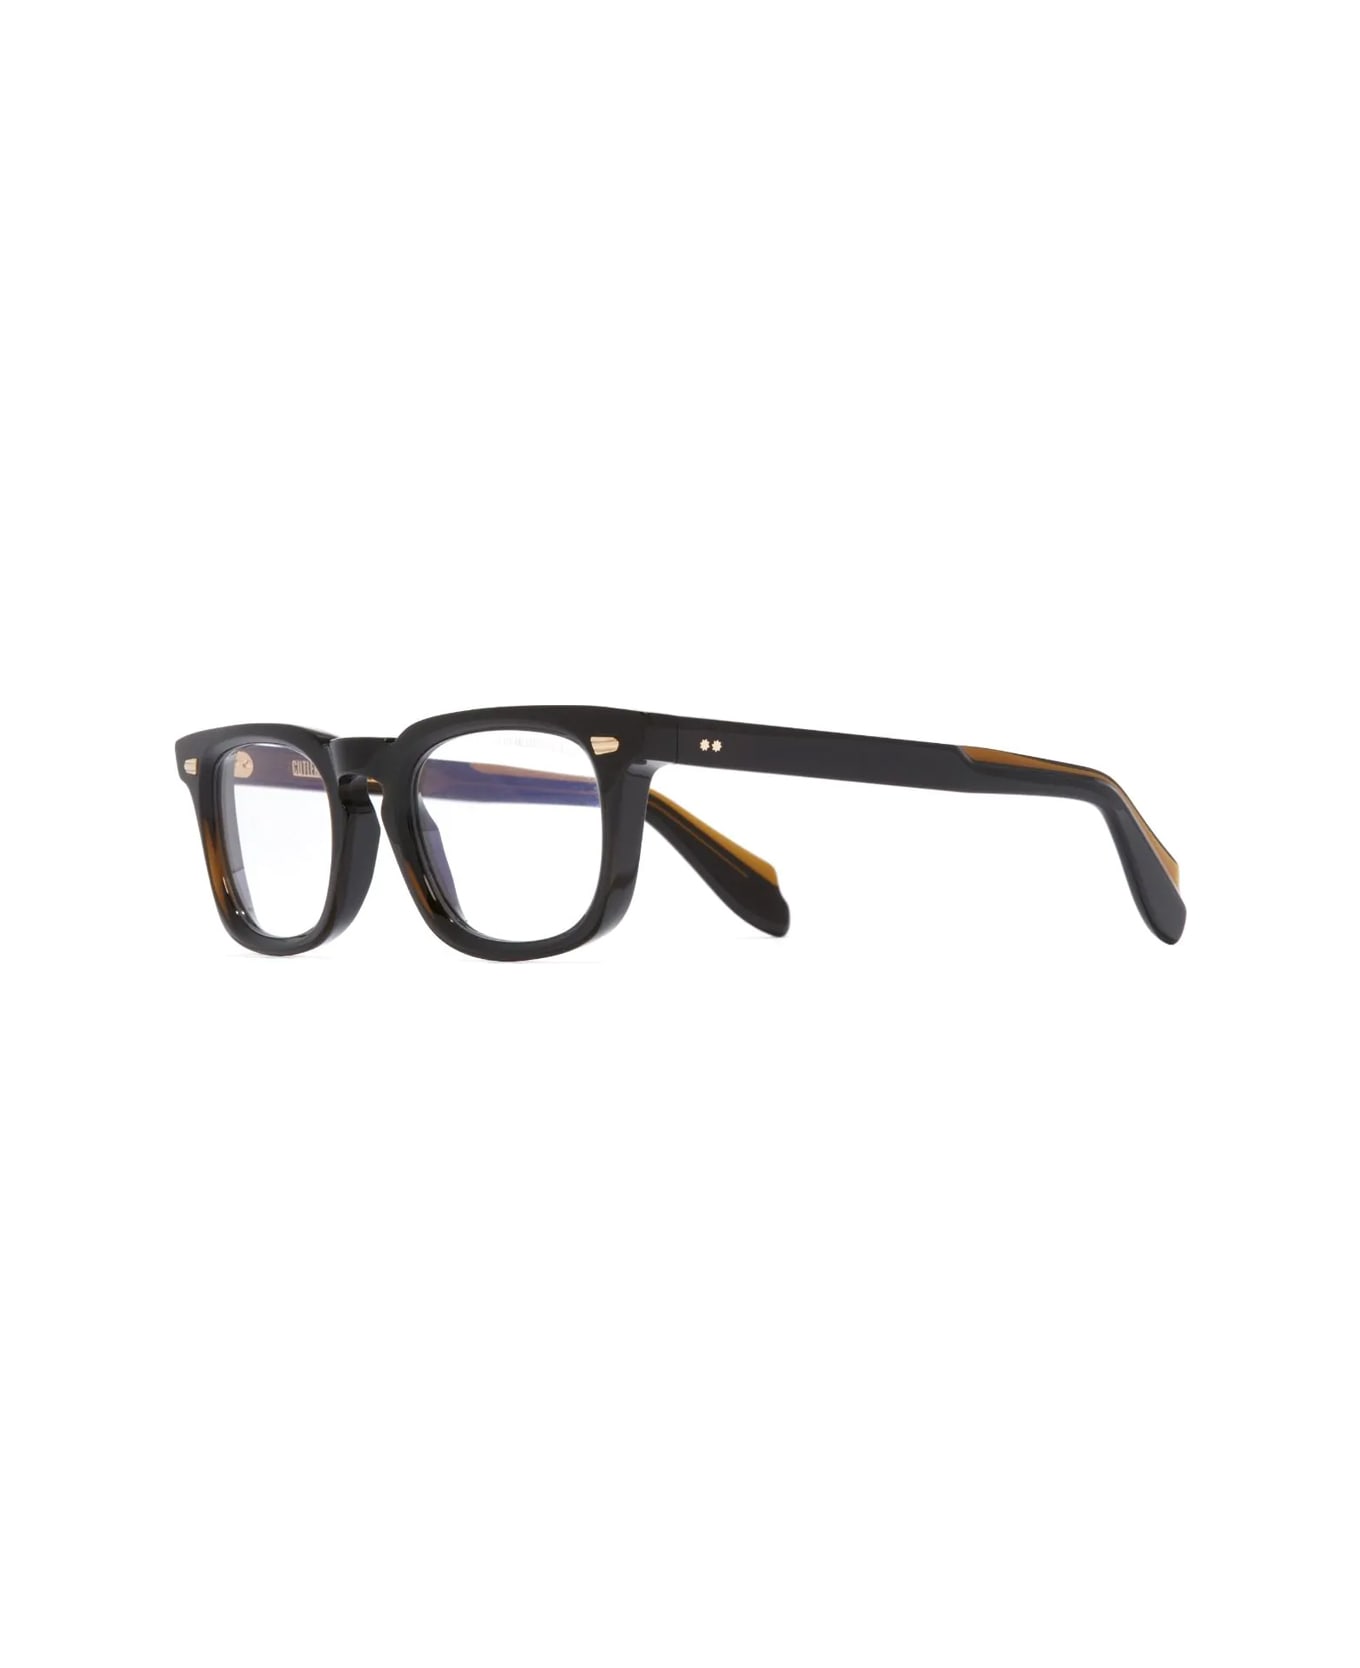 Cutler and Gross 1406 01 Glasses - Nero アイウェア